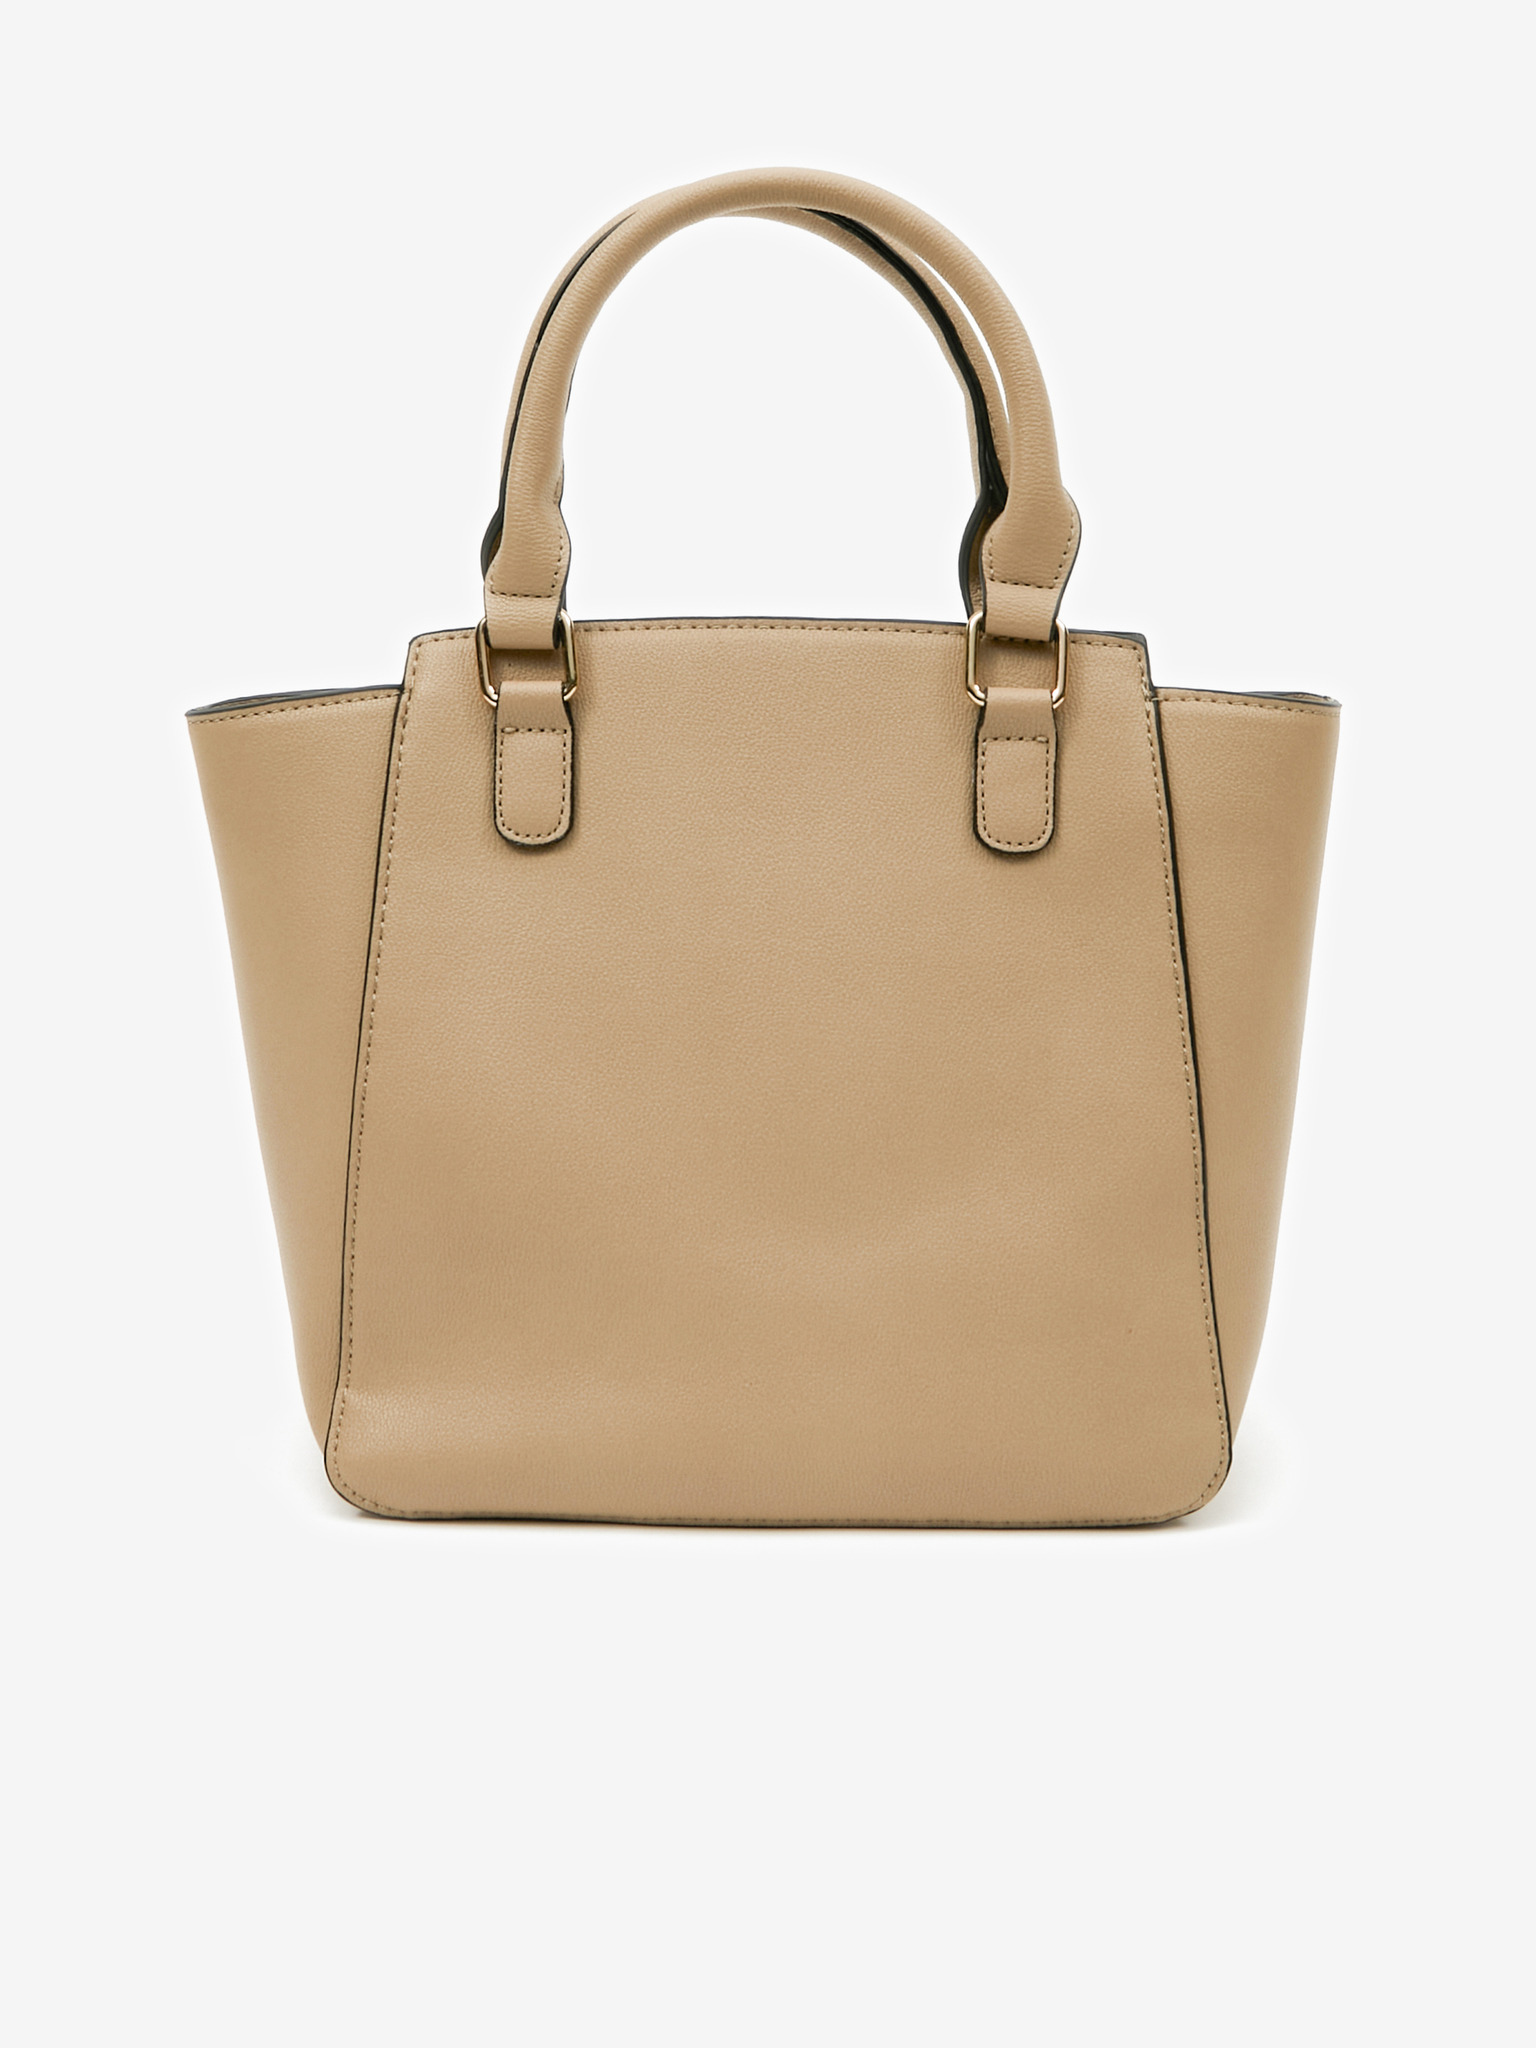 Hidesign White Colour Medium Shoulder Bag Orsay 03 Handbag